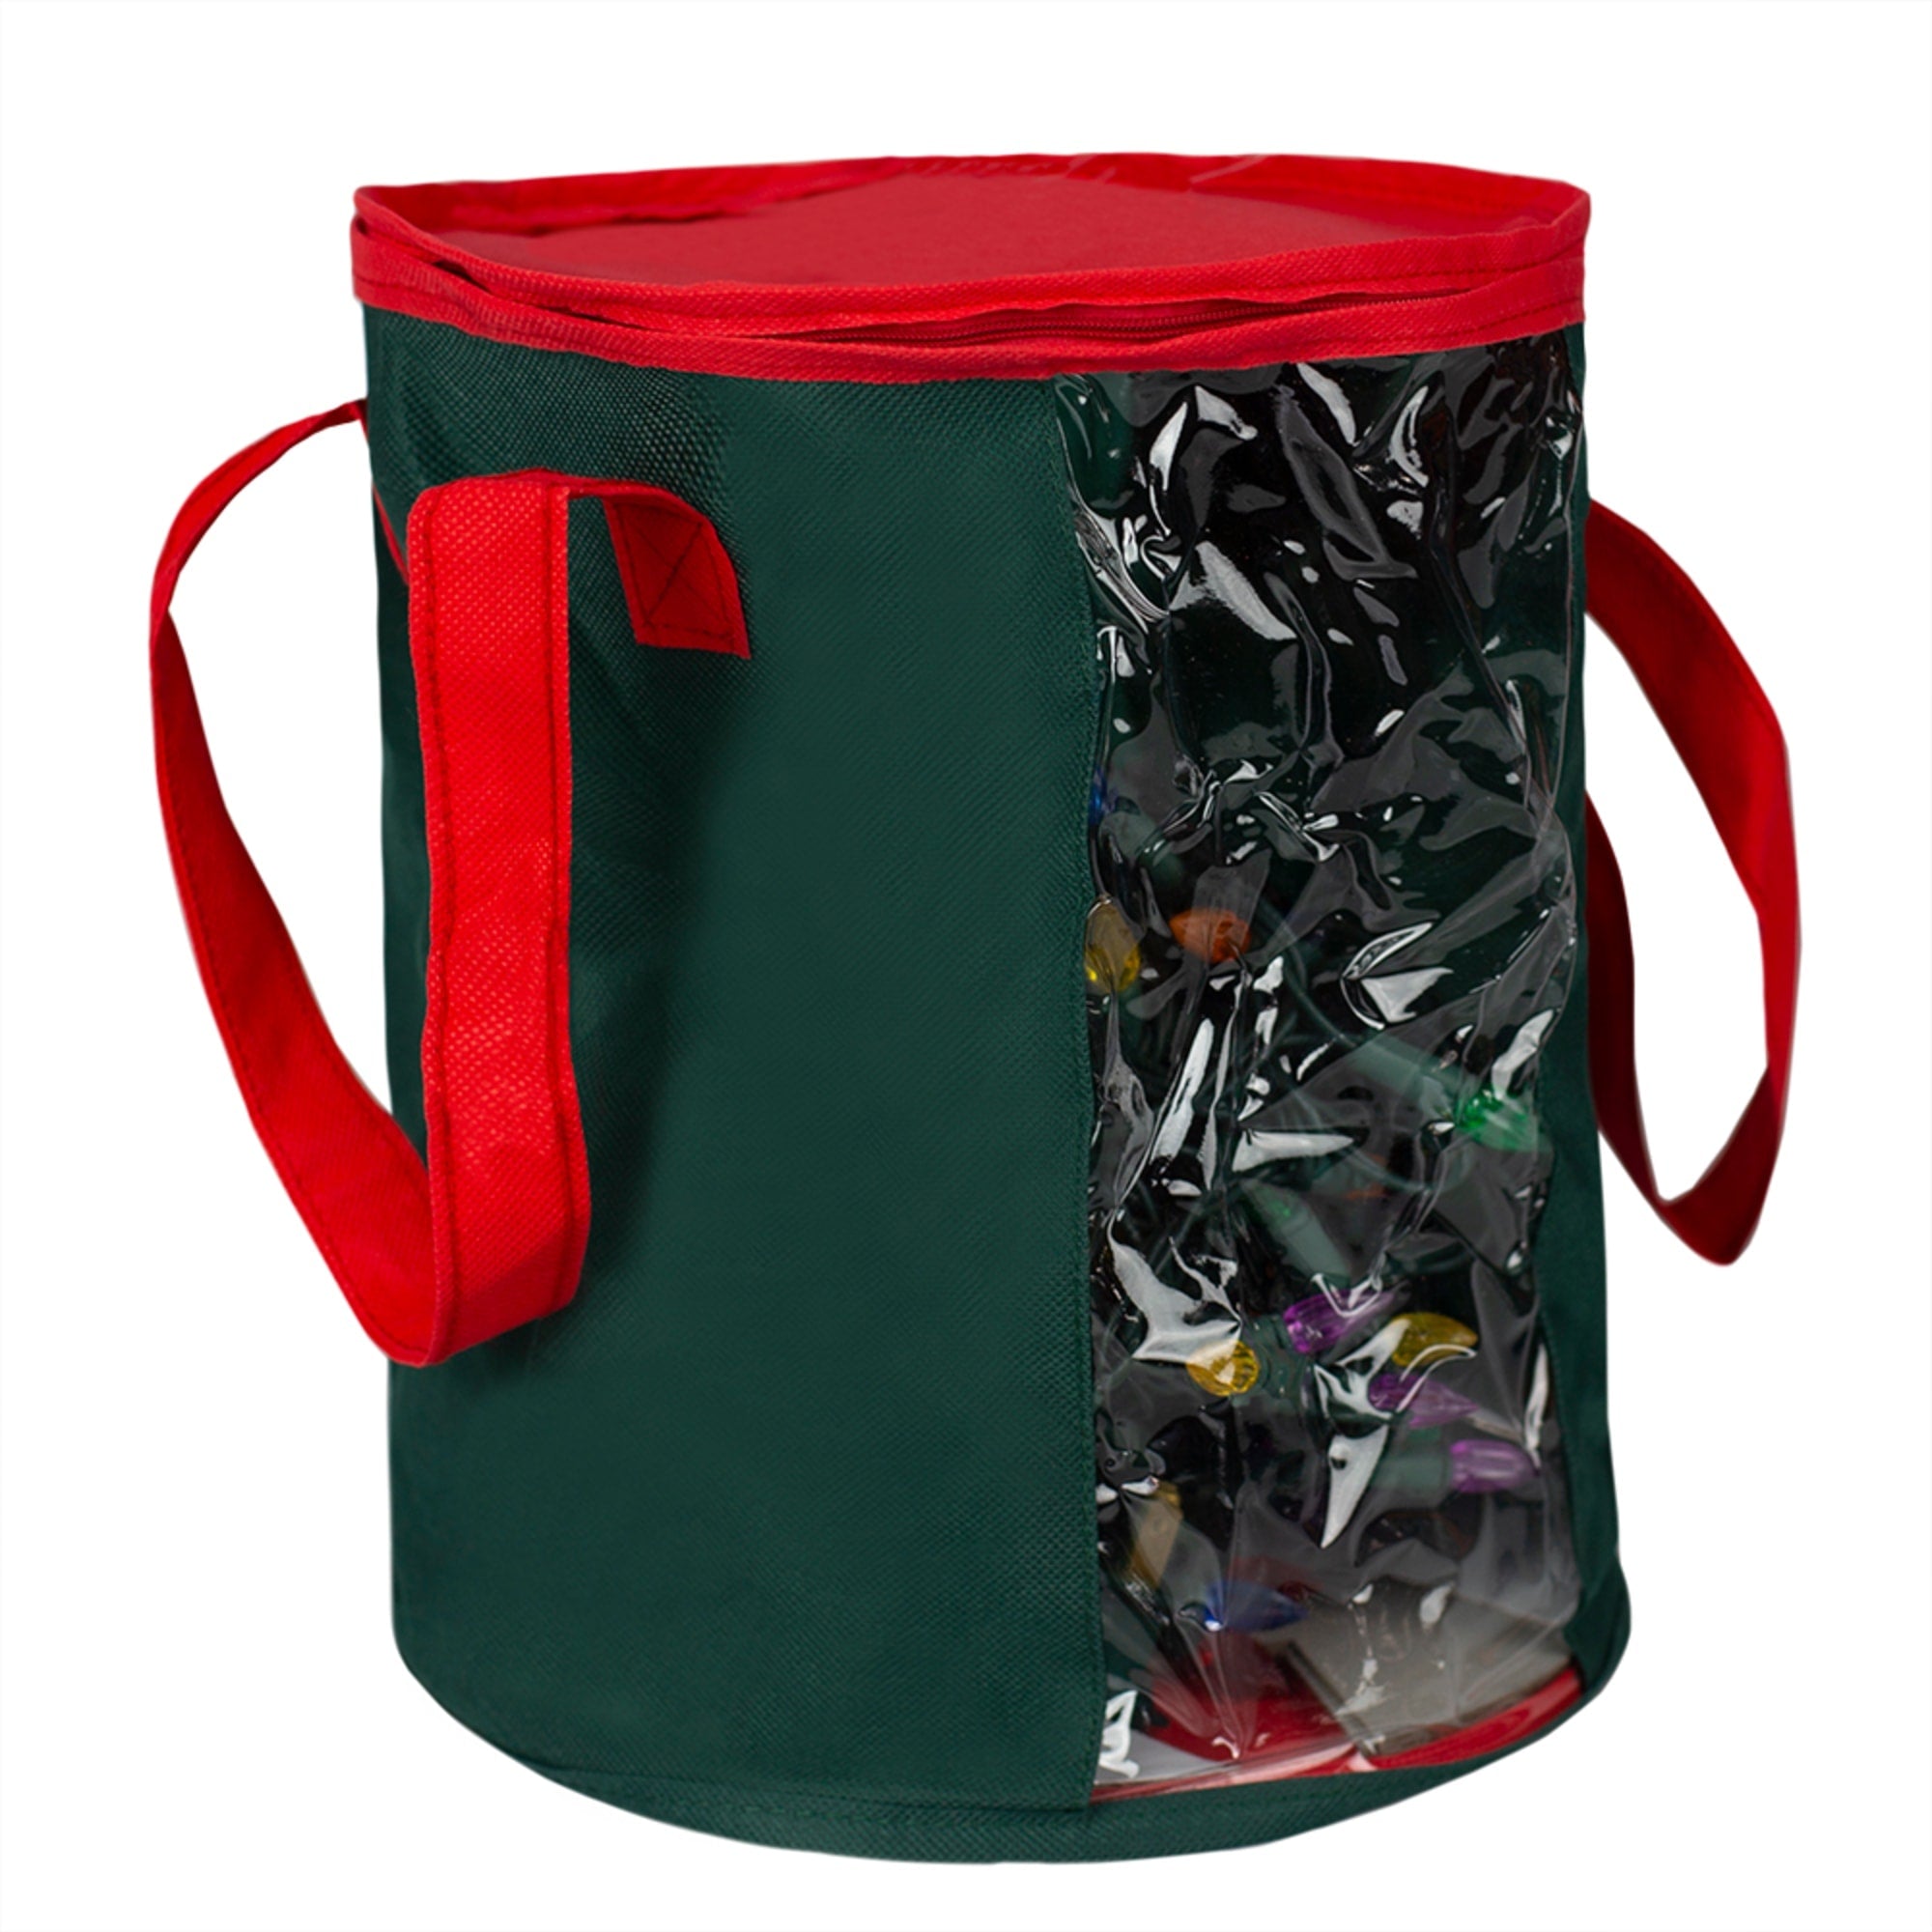 Home Basics Christmas Light Storage Bag, Green $4.00 EACH, CASE PACK OF 12